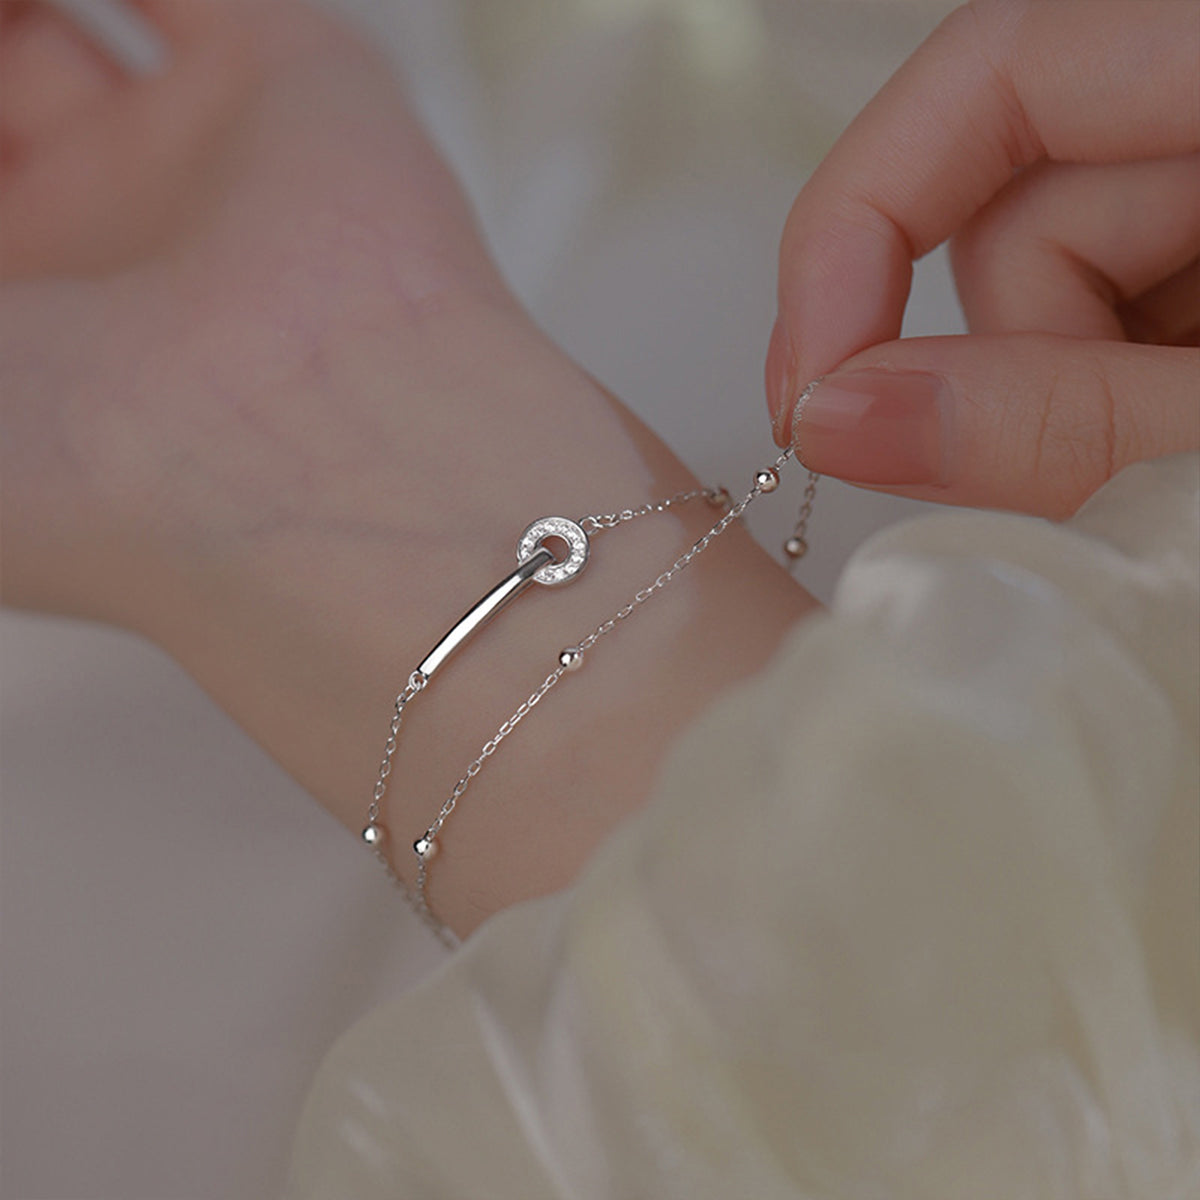 Adjustable Silver Bracelet with Cubic Zirconia